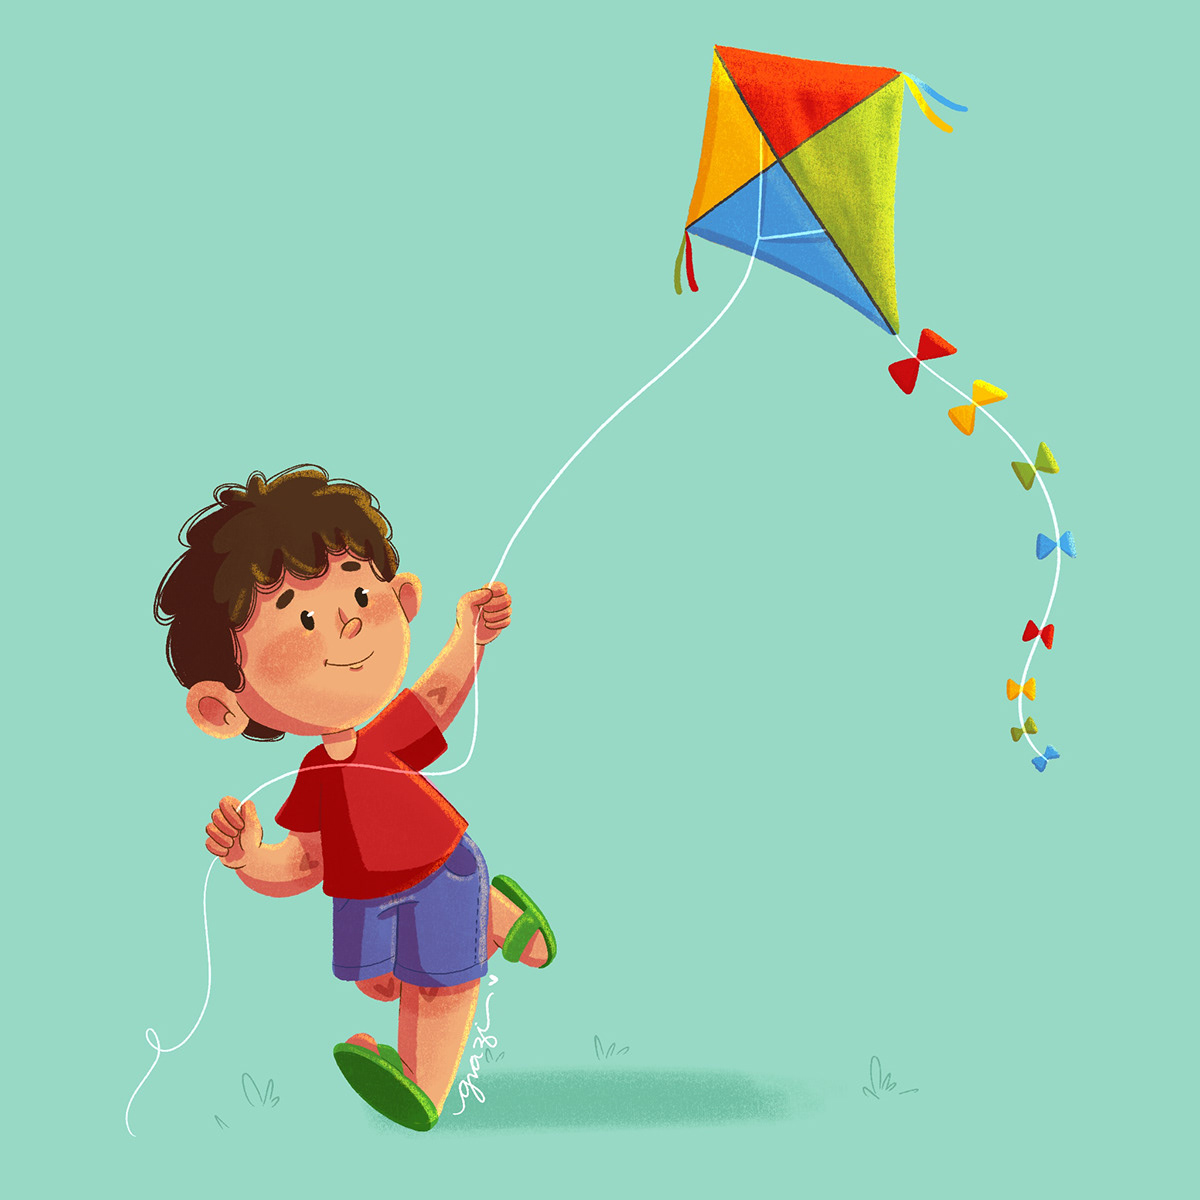 Image may contain: kite and cartoon